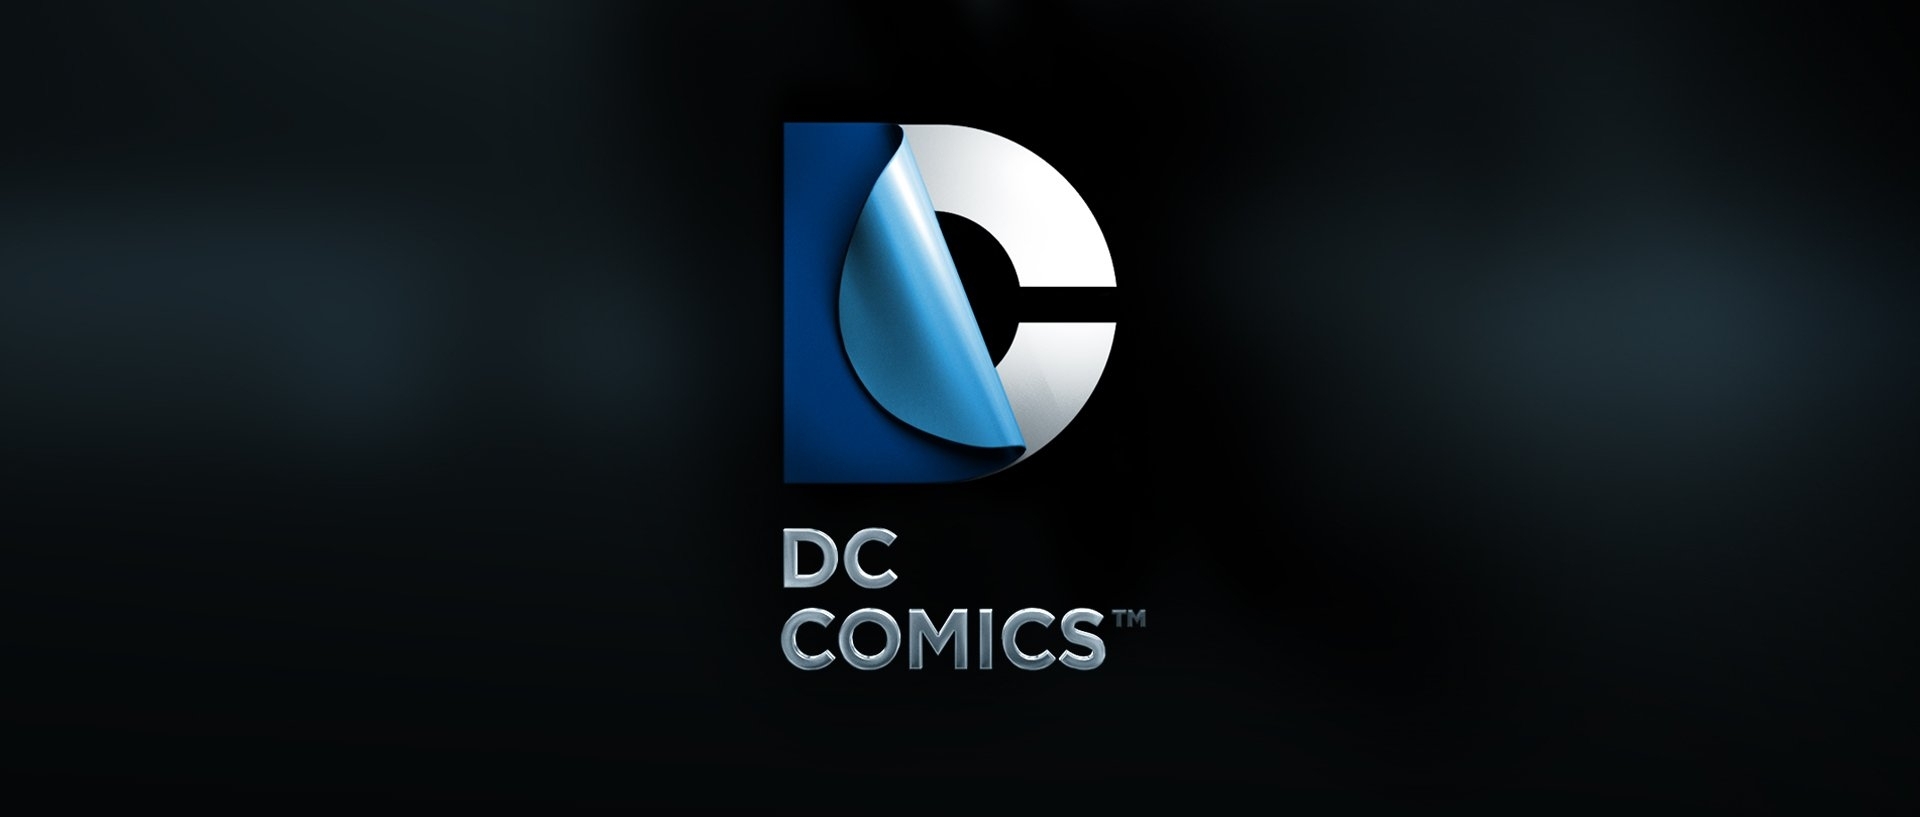 10 Most Popular Dc Comics Logo Wallpaper FULL HD 1080p For PC Background